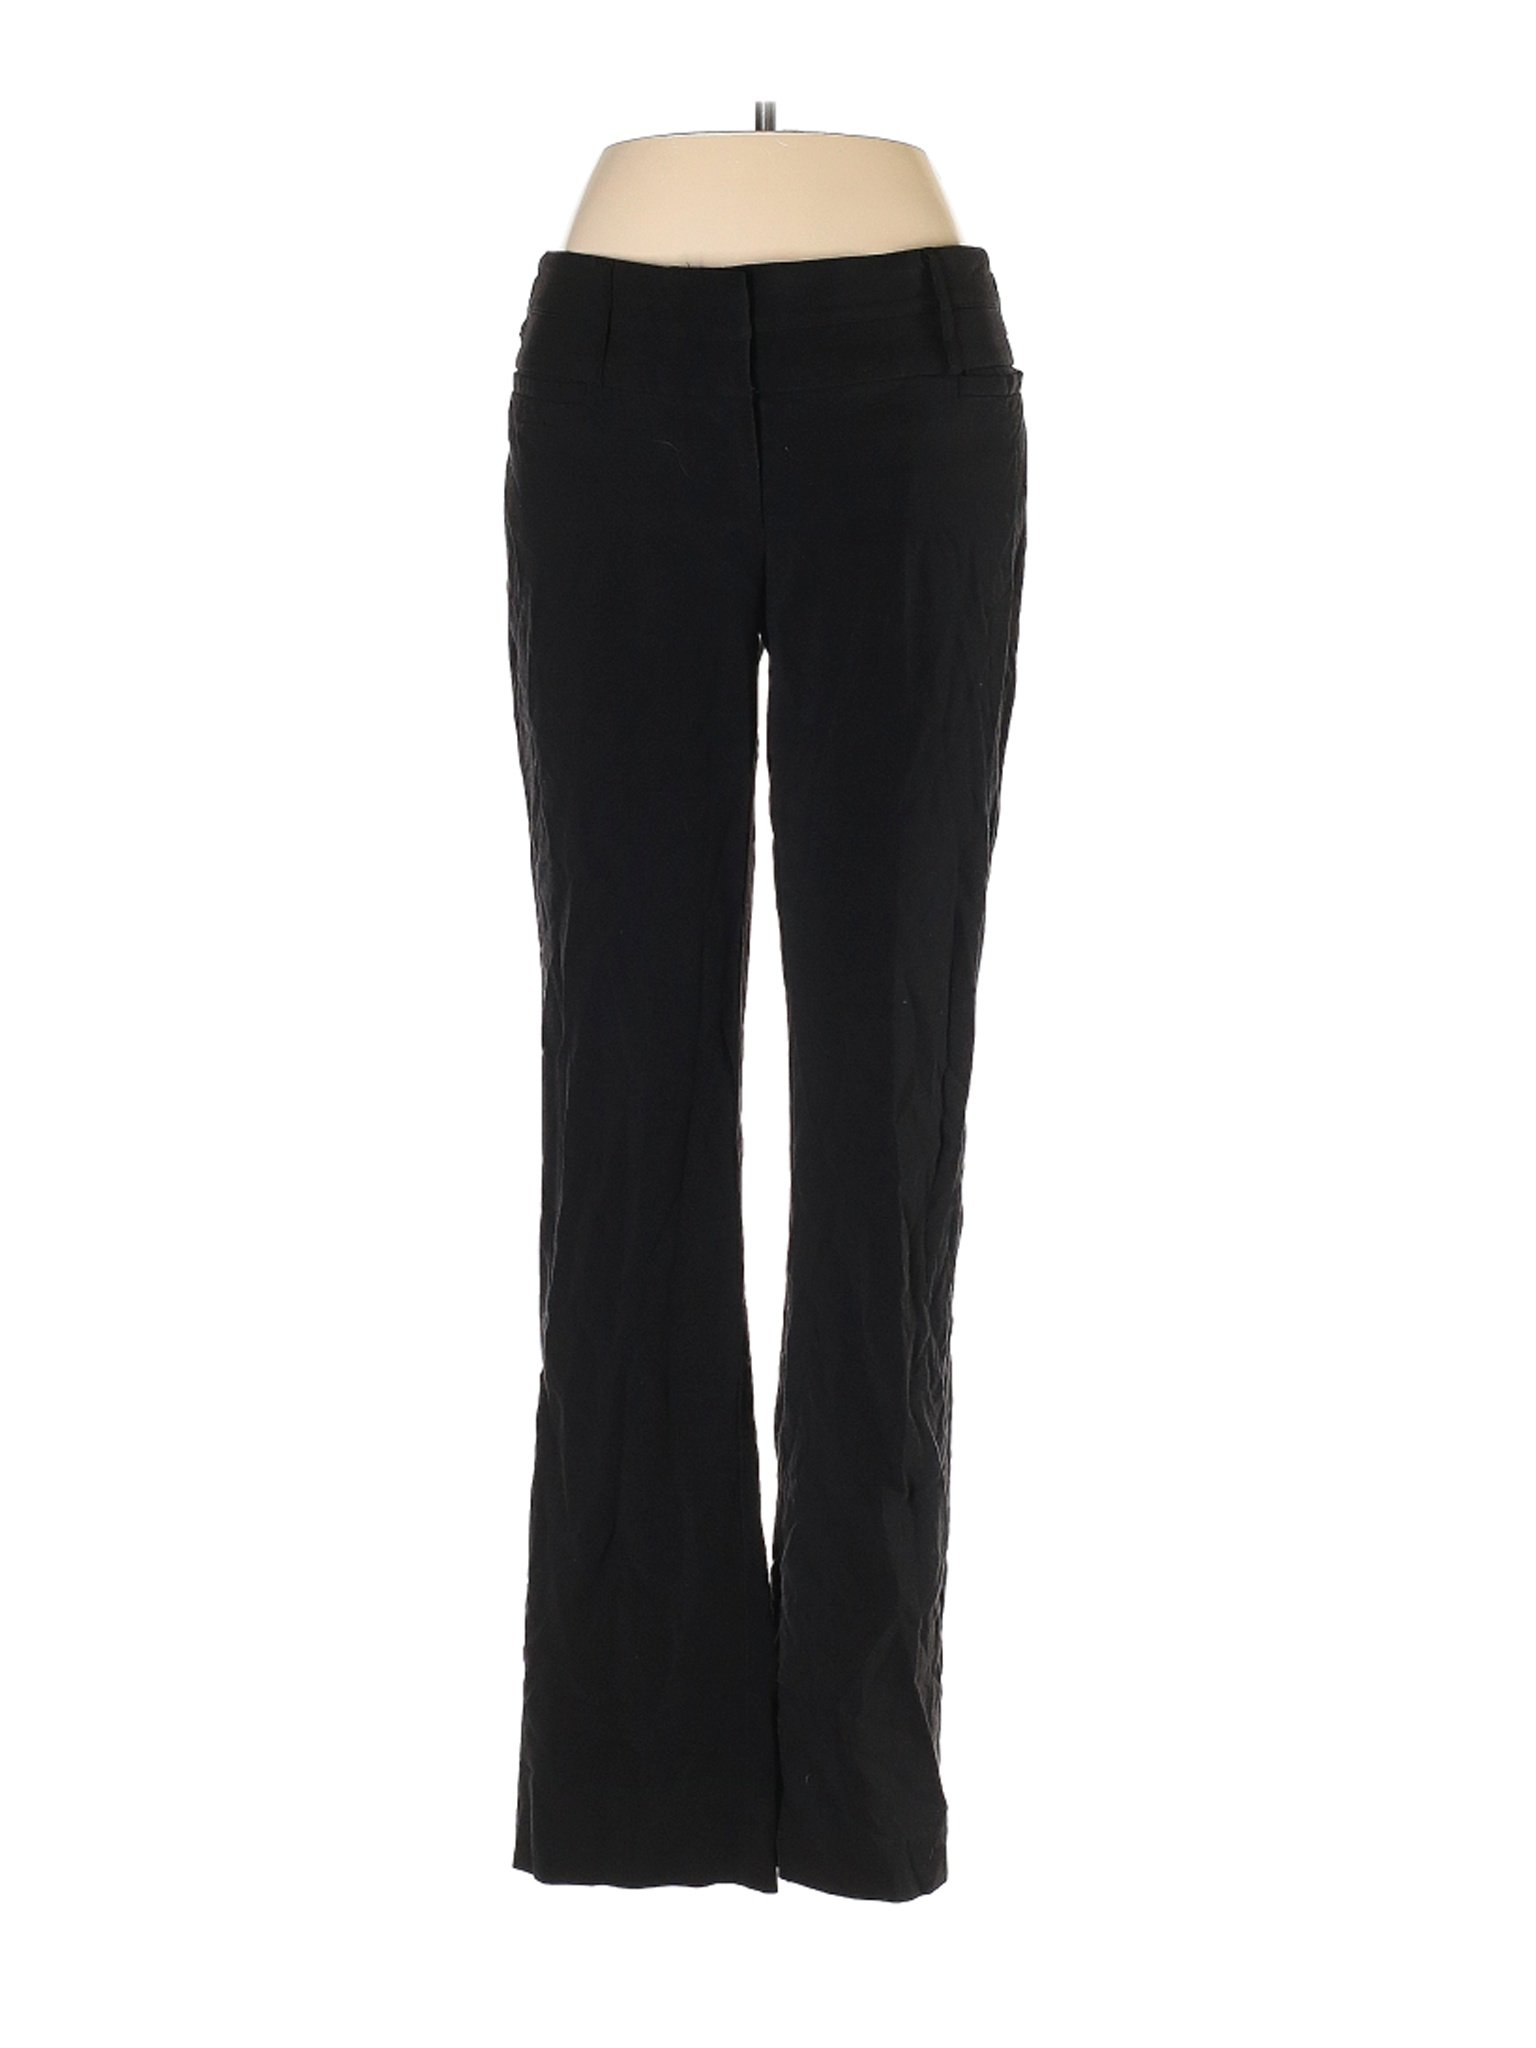 Hollywould Women Black Dress Pants 5 | eBay